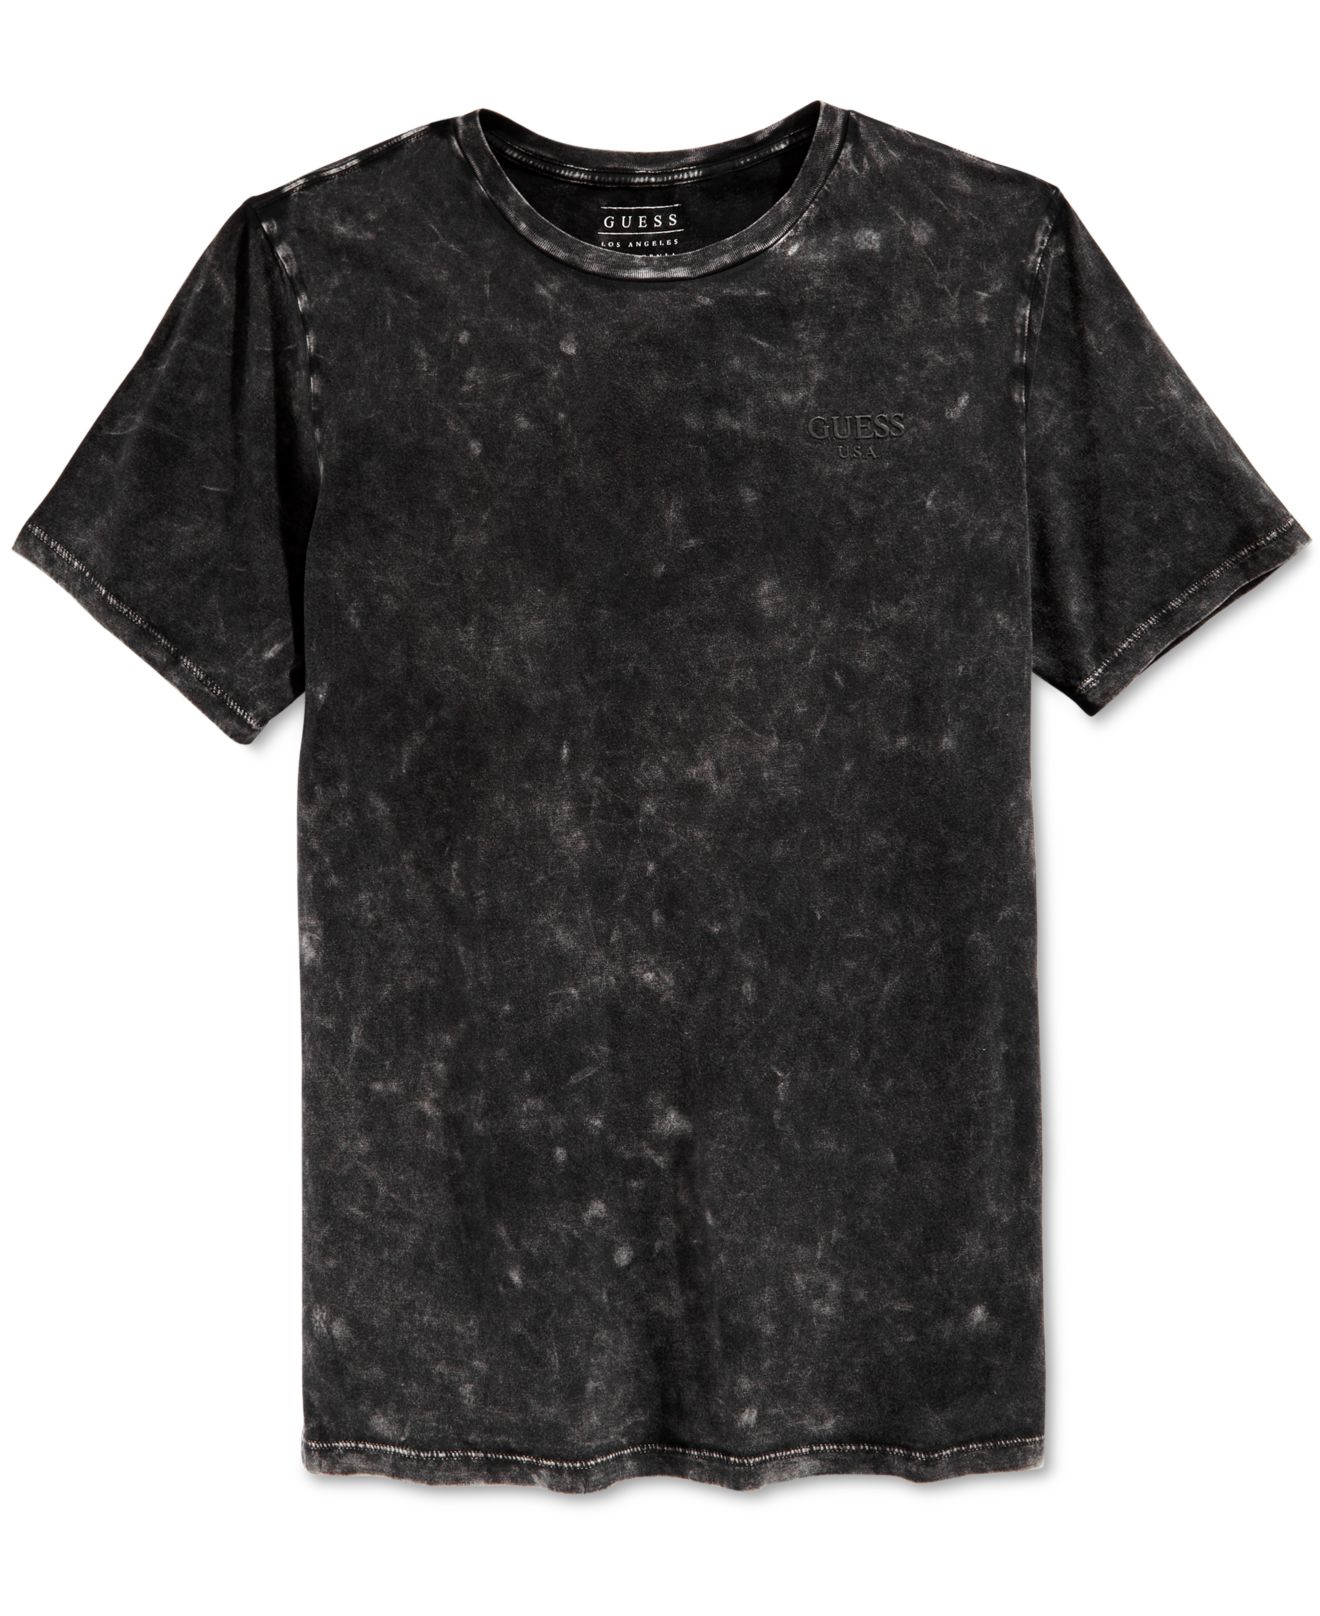 Lyst - Guess Men's Flag Acid-wash Graphic-print T-shirt in Black for Men